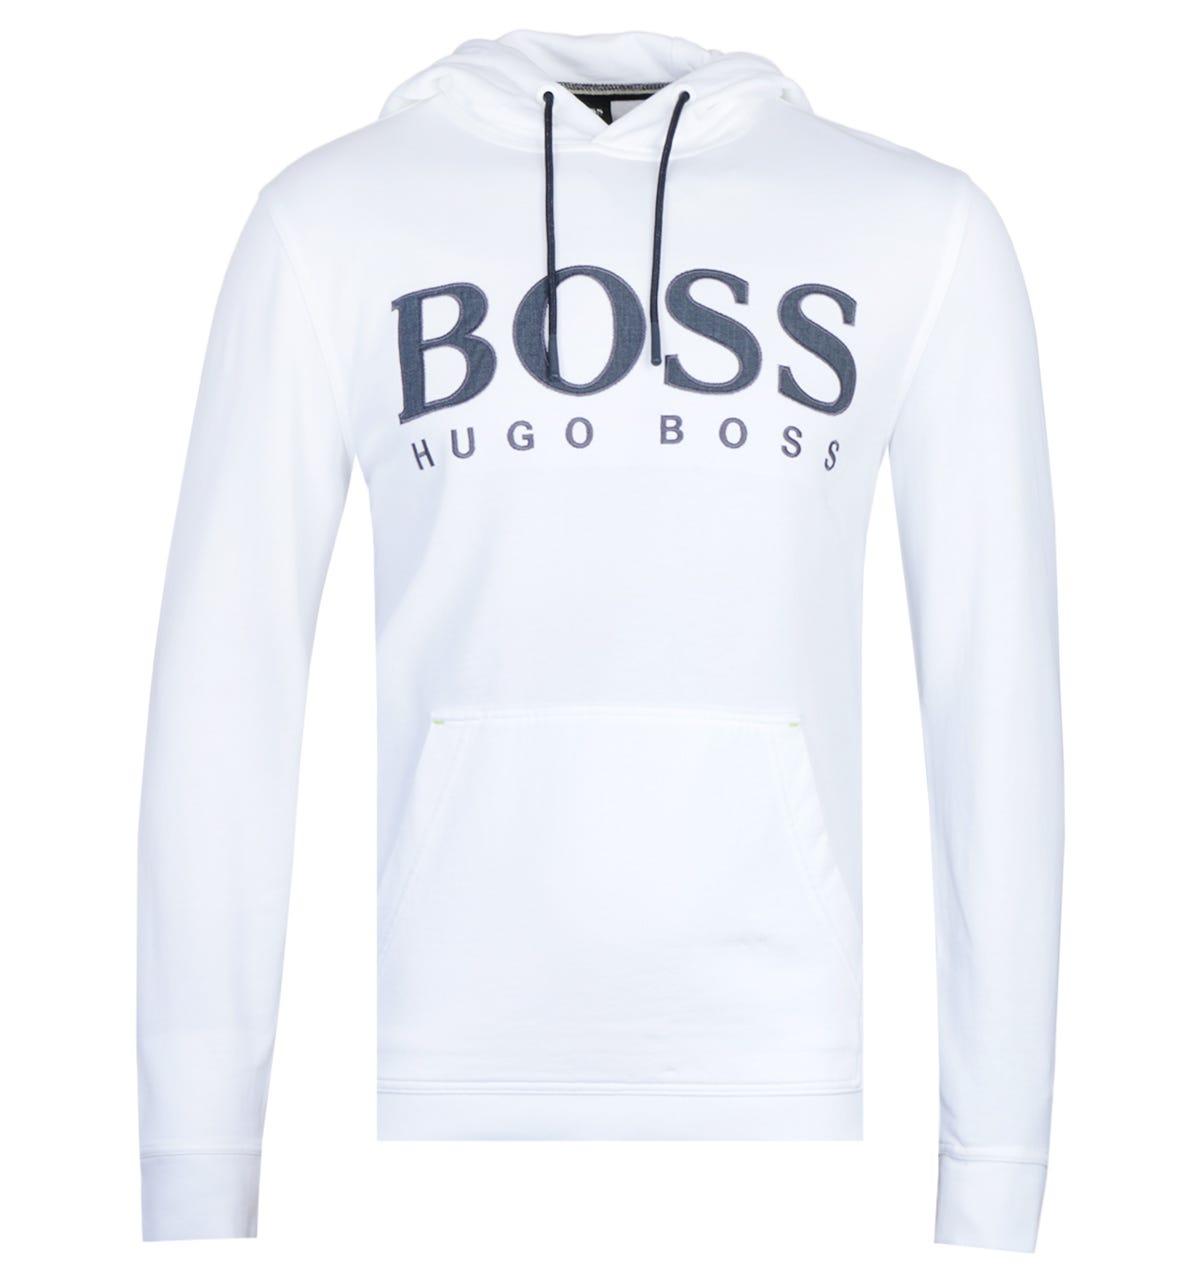 BOSS by Hugo Boss Weztand Contrast Logo White Hoodie for Men - Lyst